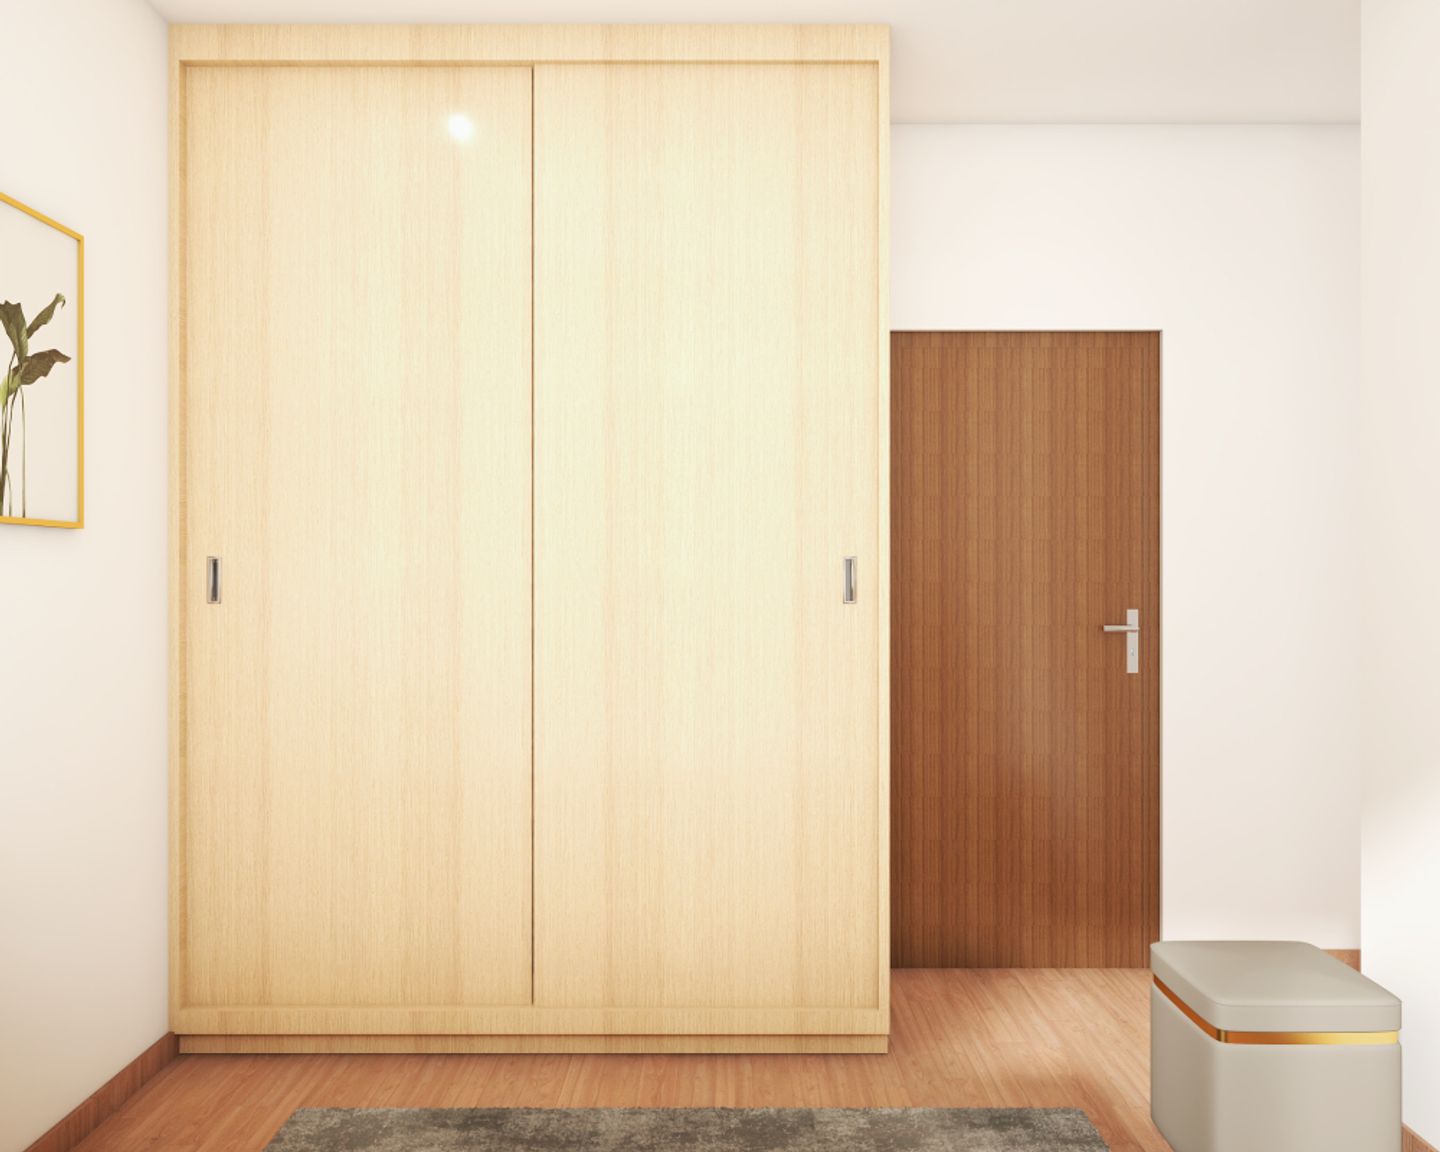 Light Wood Floor-To-Ceiling Minimalistic Wardrobe Design - Livspace